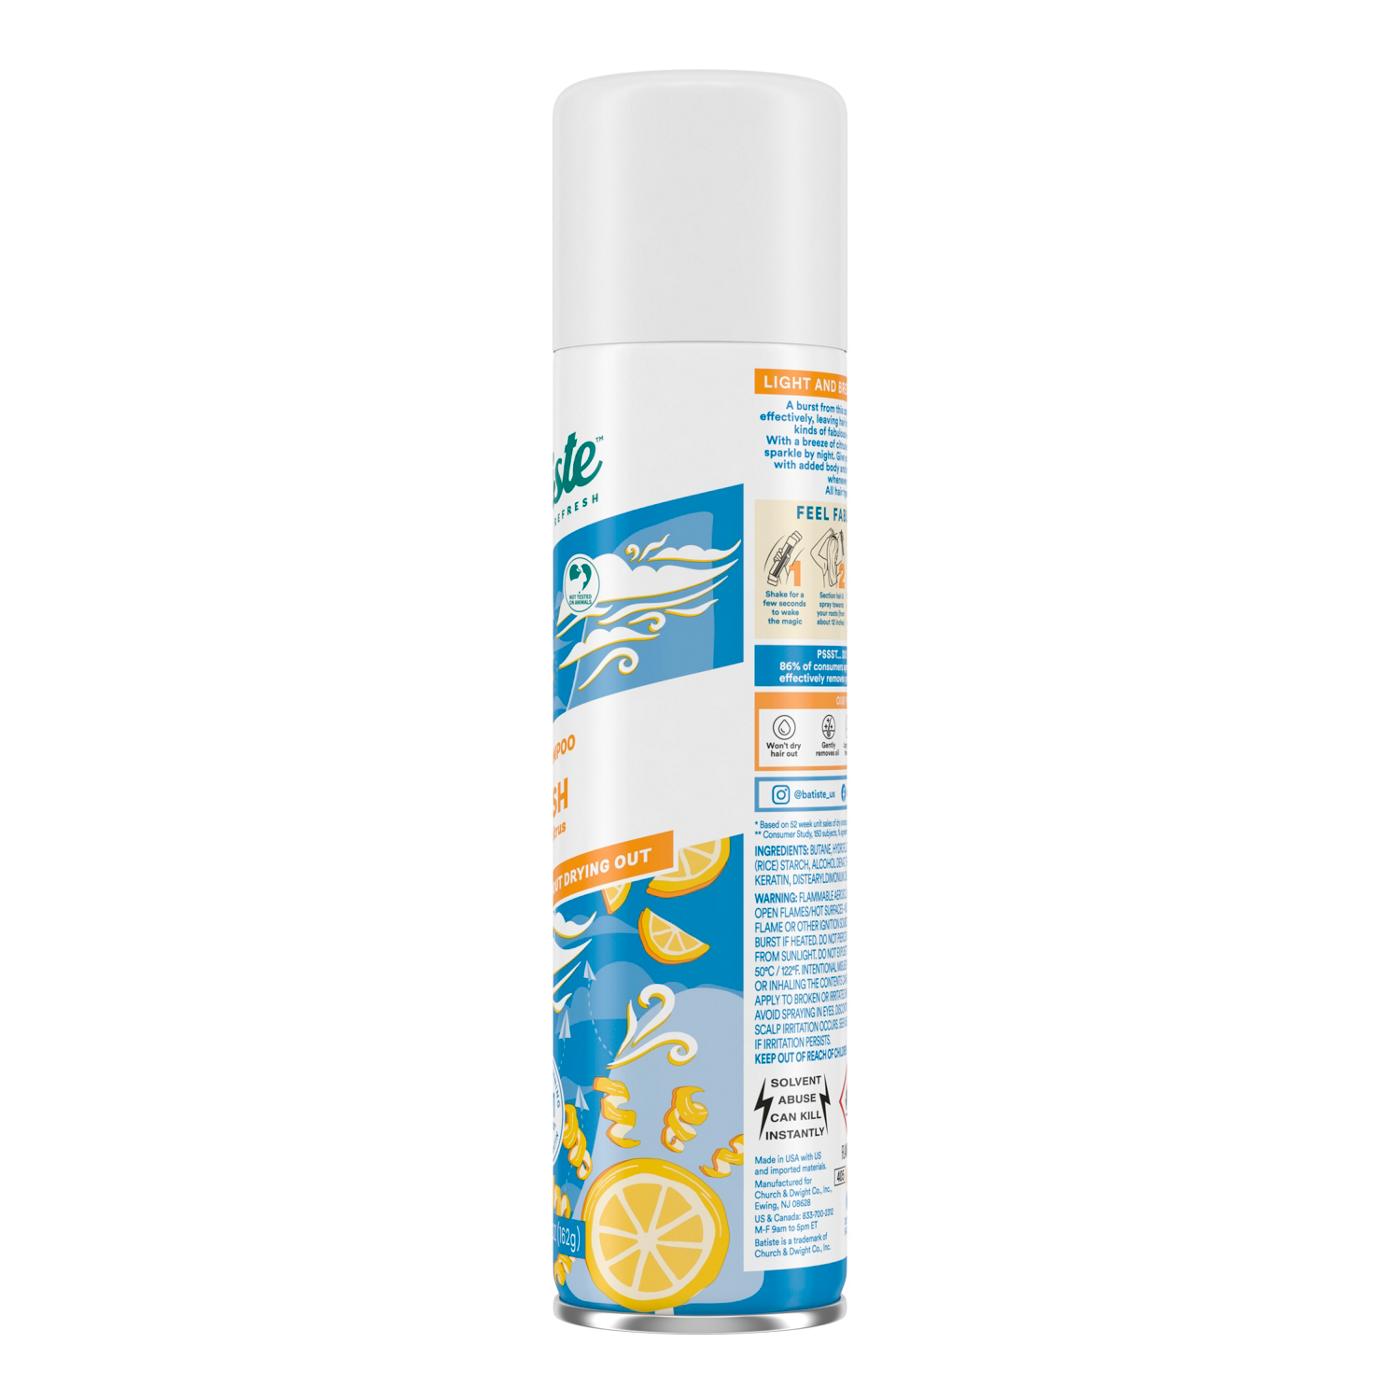 Batiste Dry Shampoo - Fresh Breezy Citrus; image 2 of 4